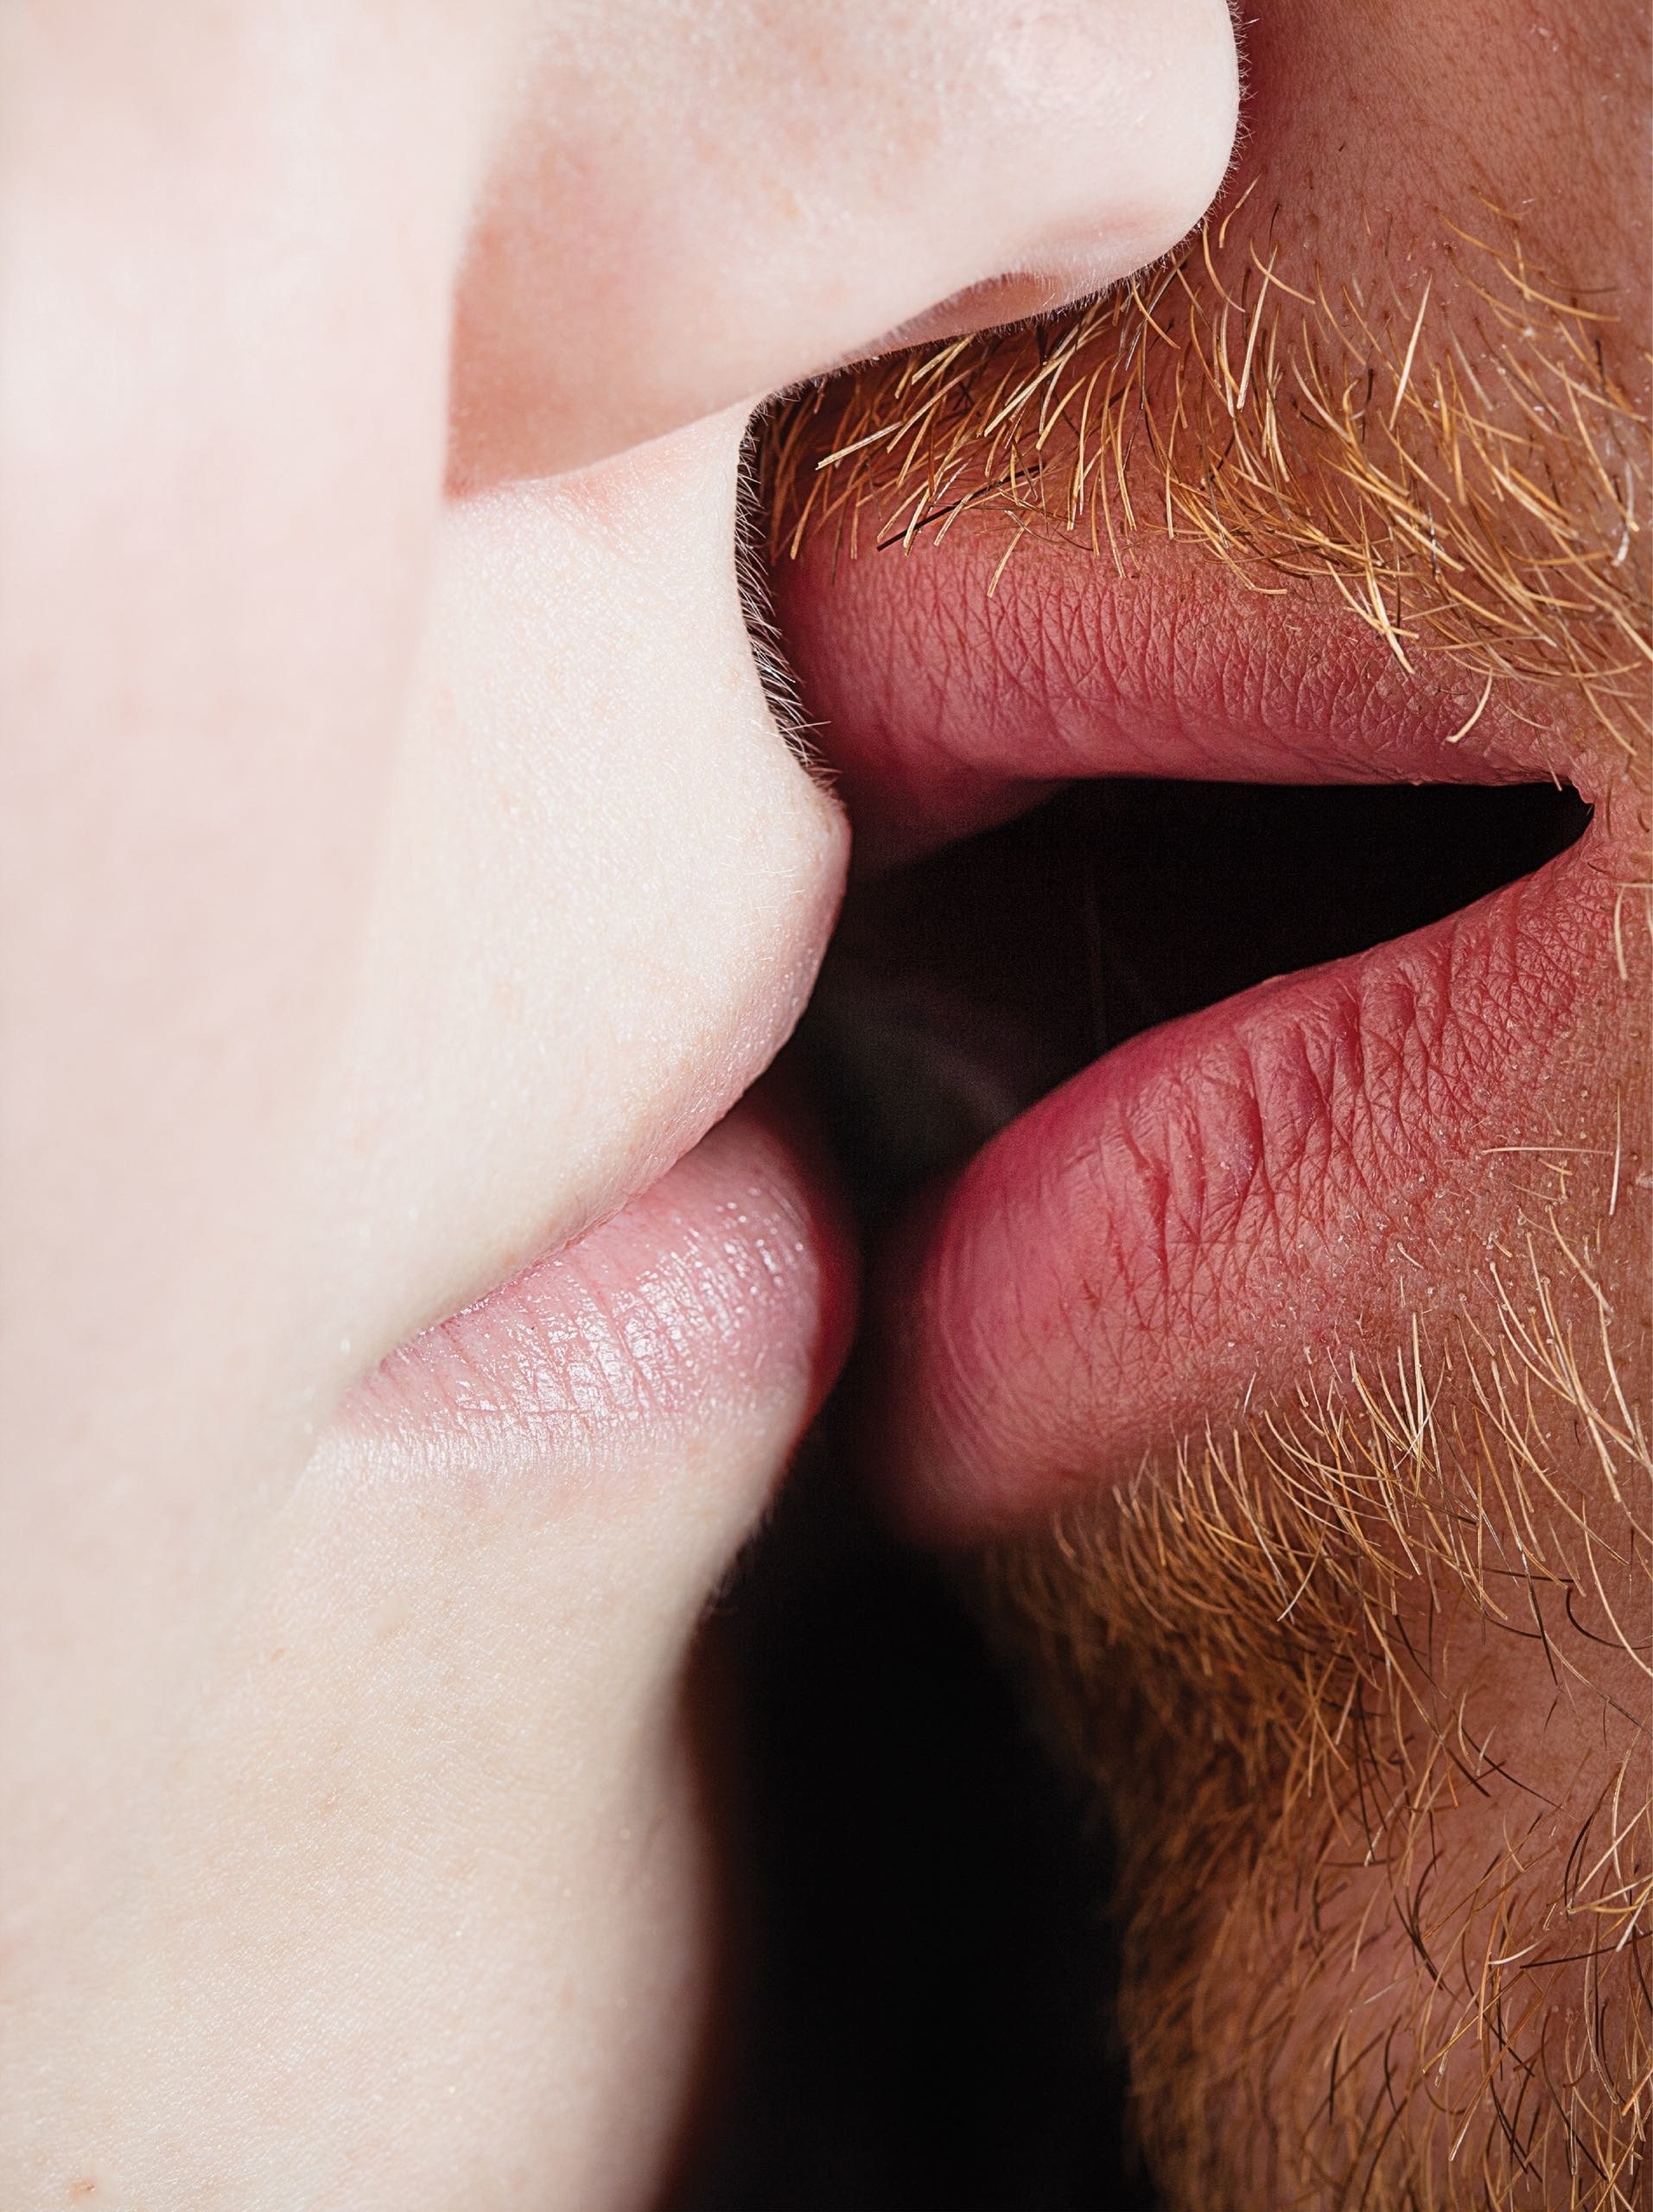 alex lev recommends close up tongue kissing pic